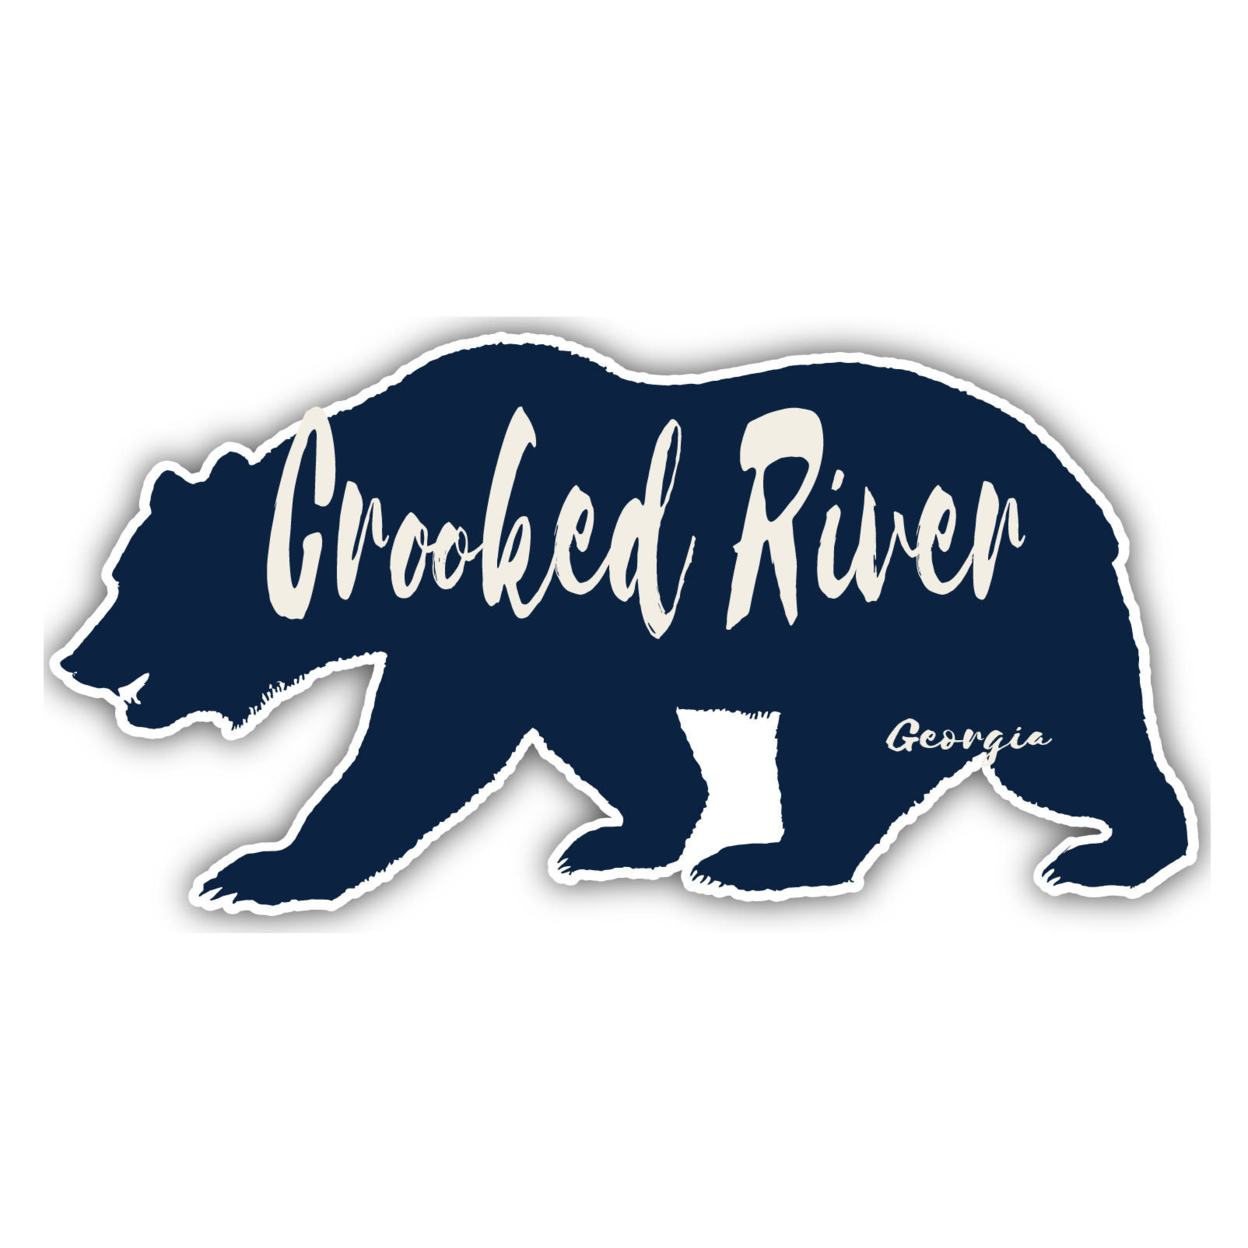 Crooked River Georgia Souvenir Decorative Stickers (Choose Theme And Size) - Single Unit, 6-Inch, Bear